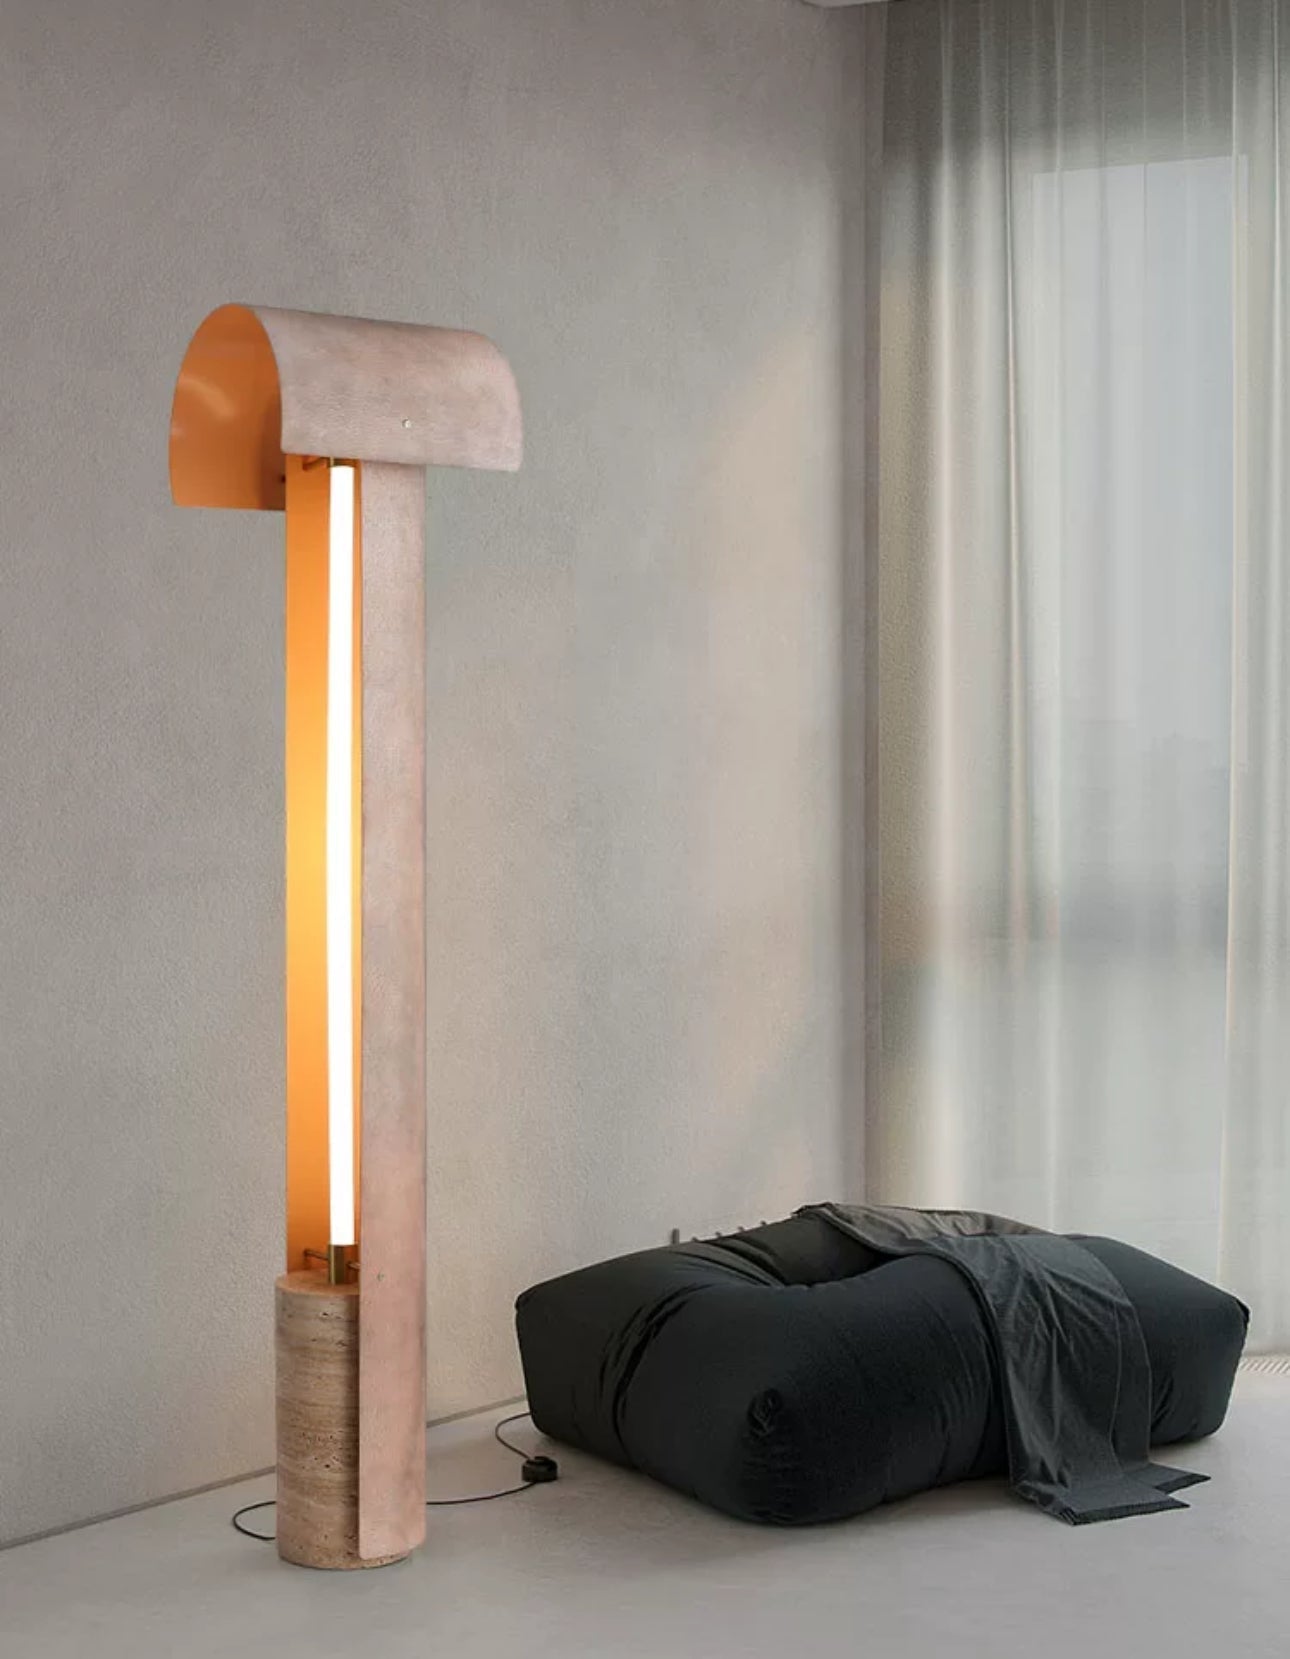 Floor Lamp - Natural Travertine Stone Led 161cm High - Modern Lamps